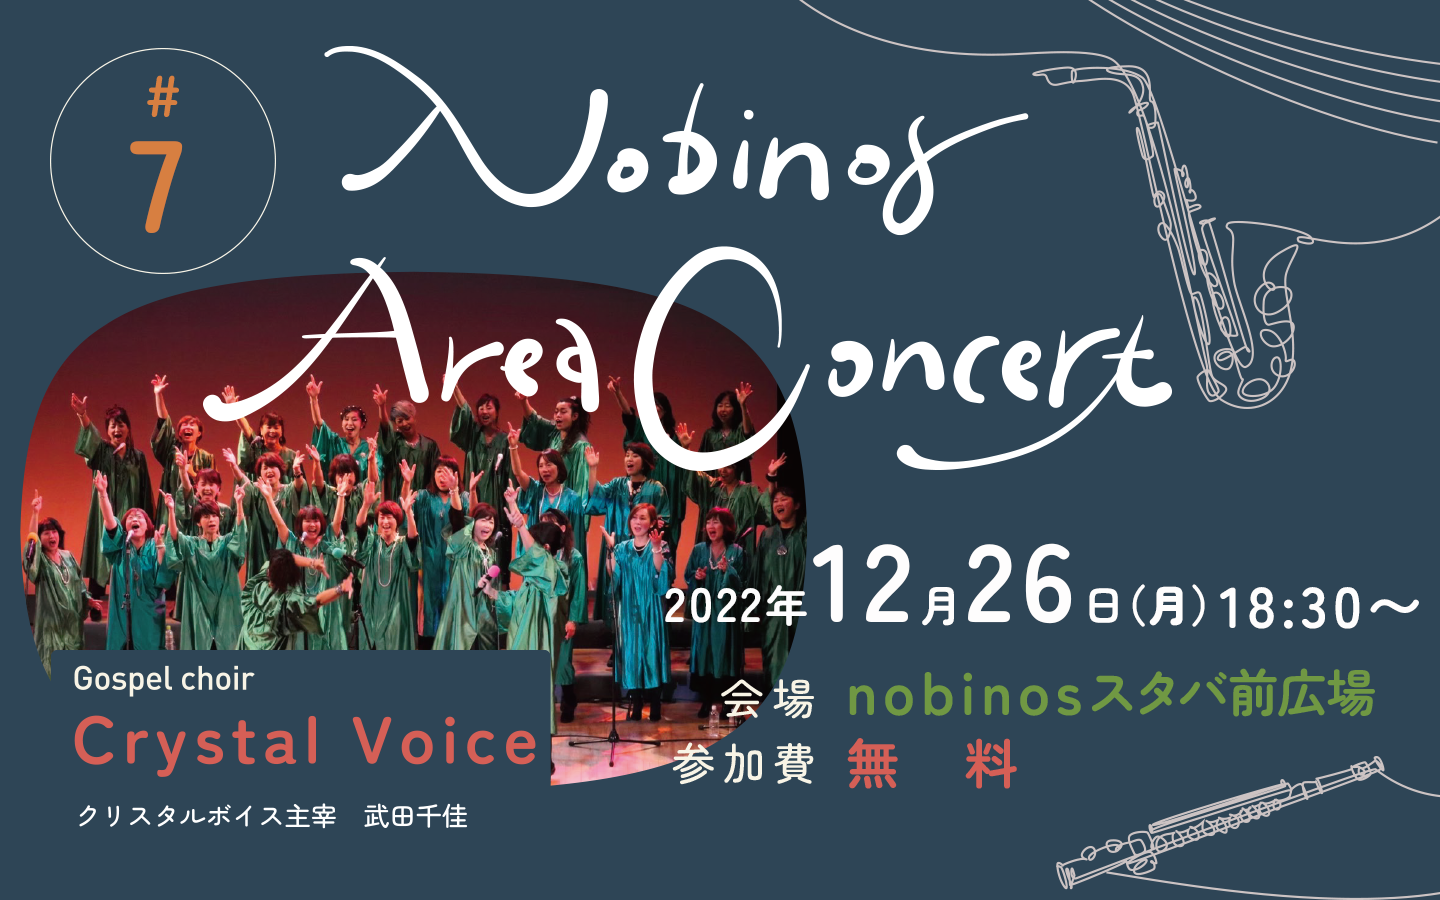 Nobinos Area Concert　#7